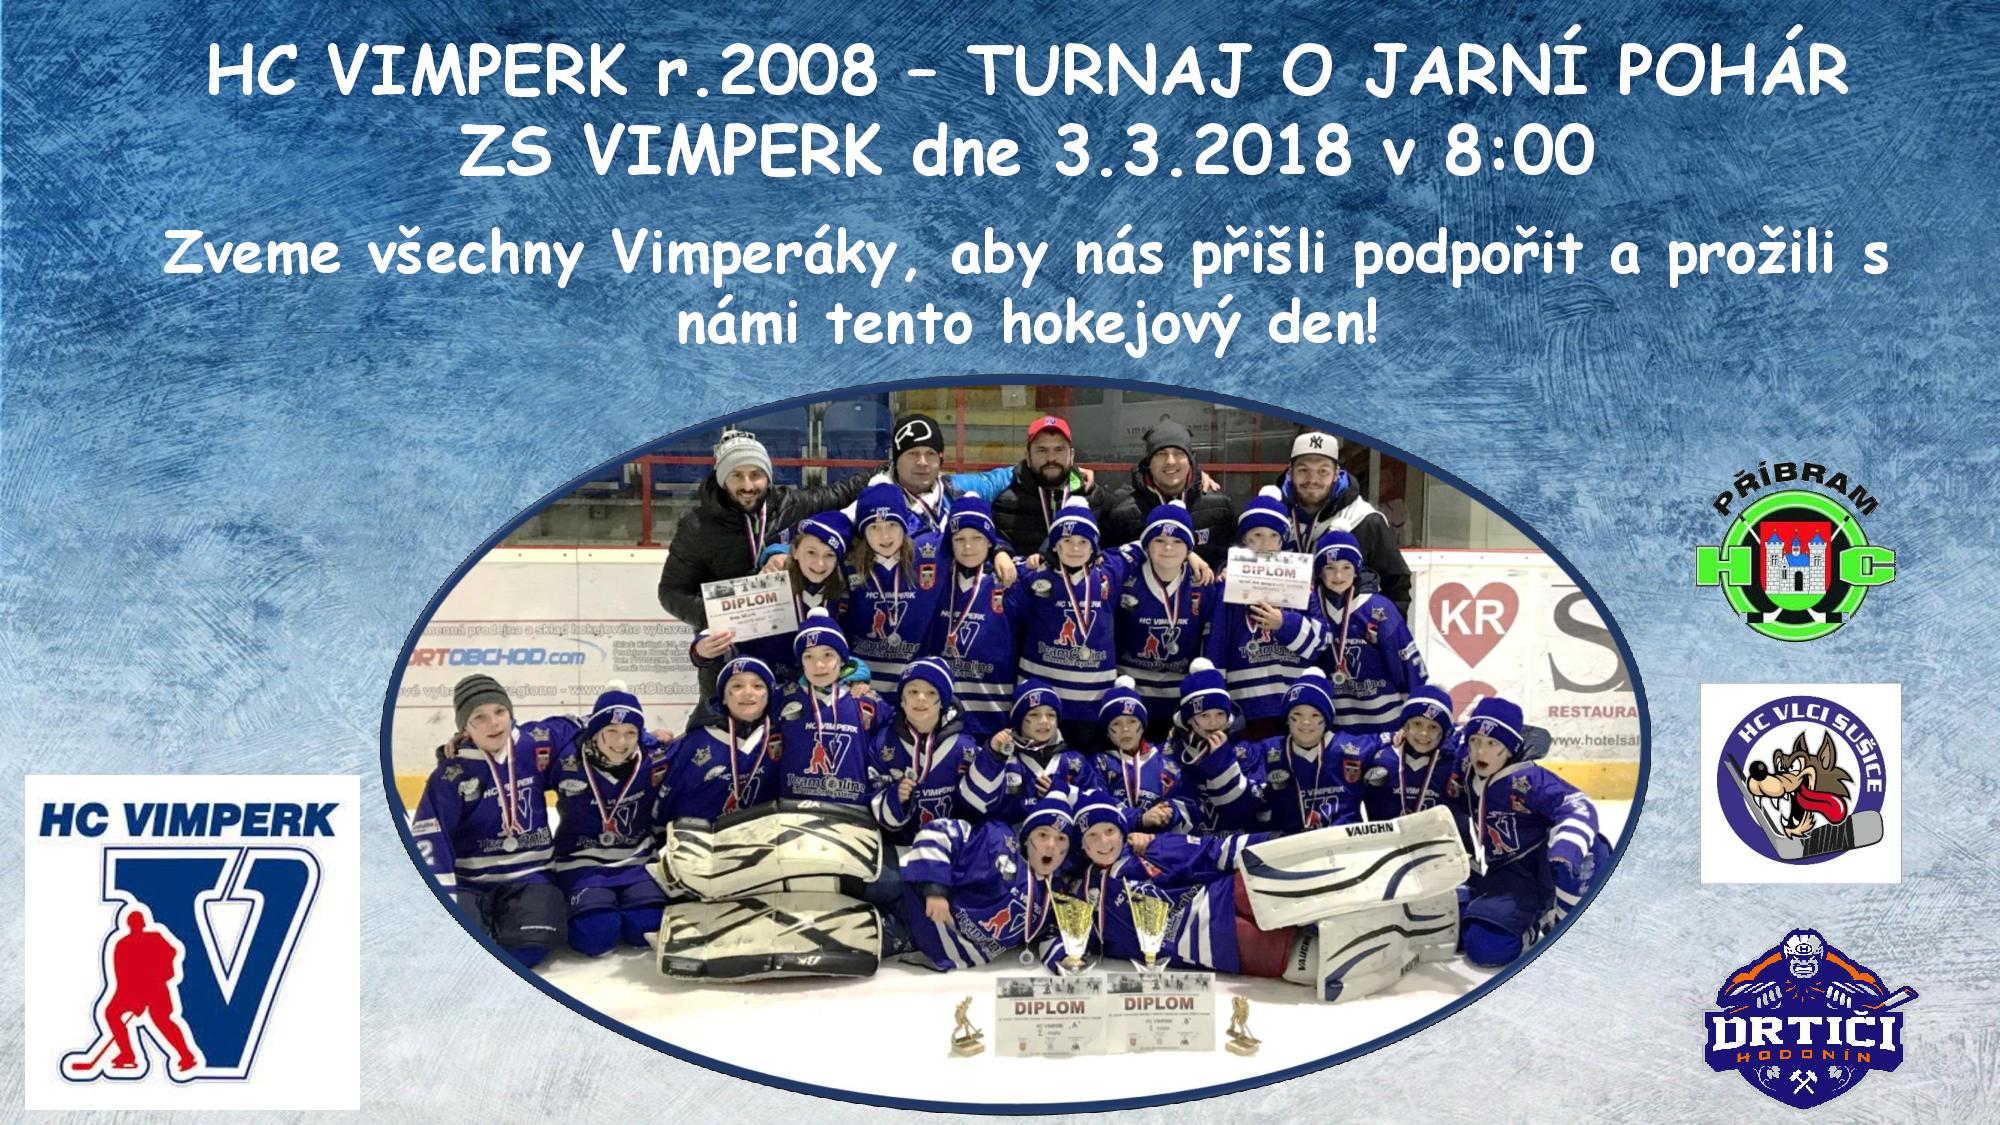 pozvanka turnaj hc vimpek 2008-page-001